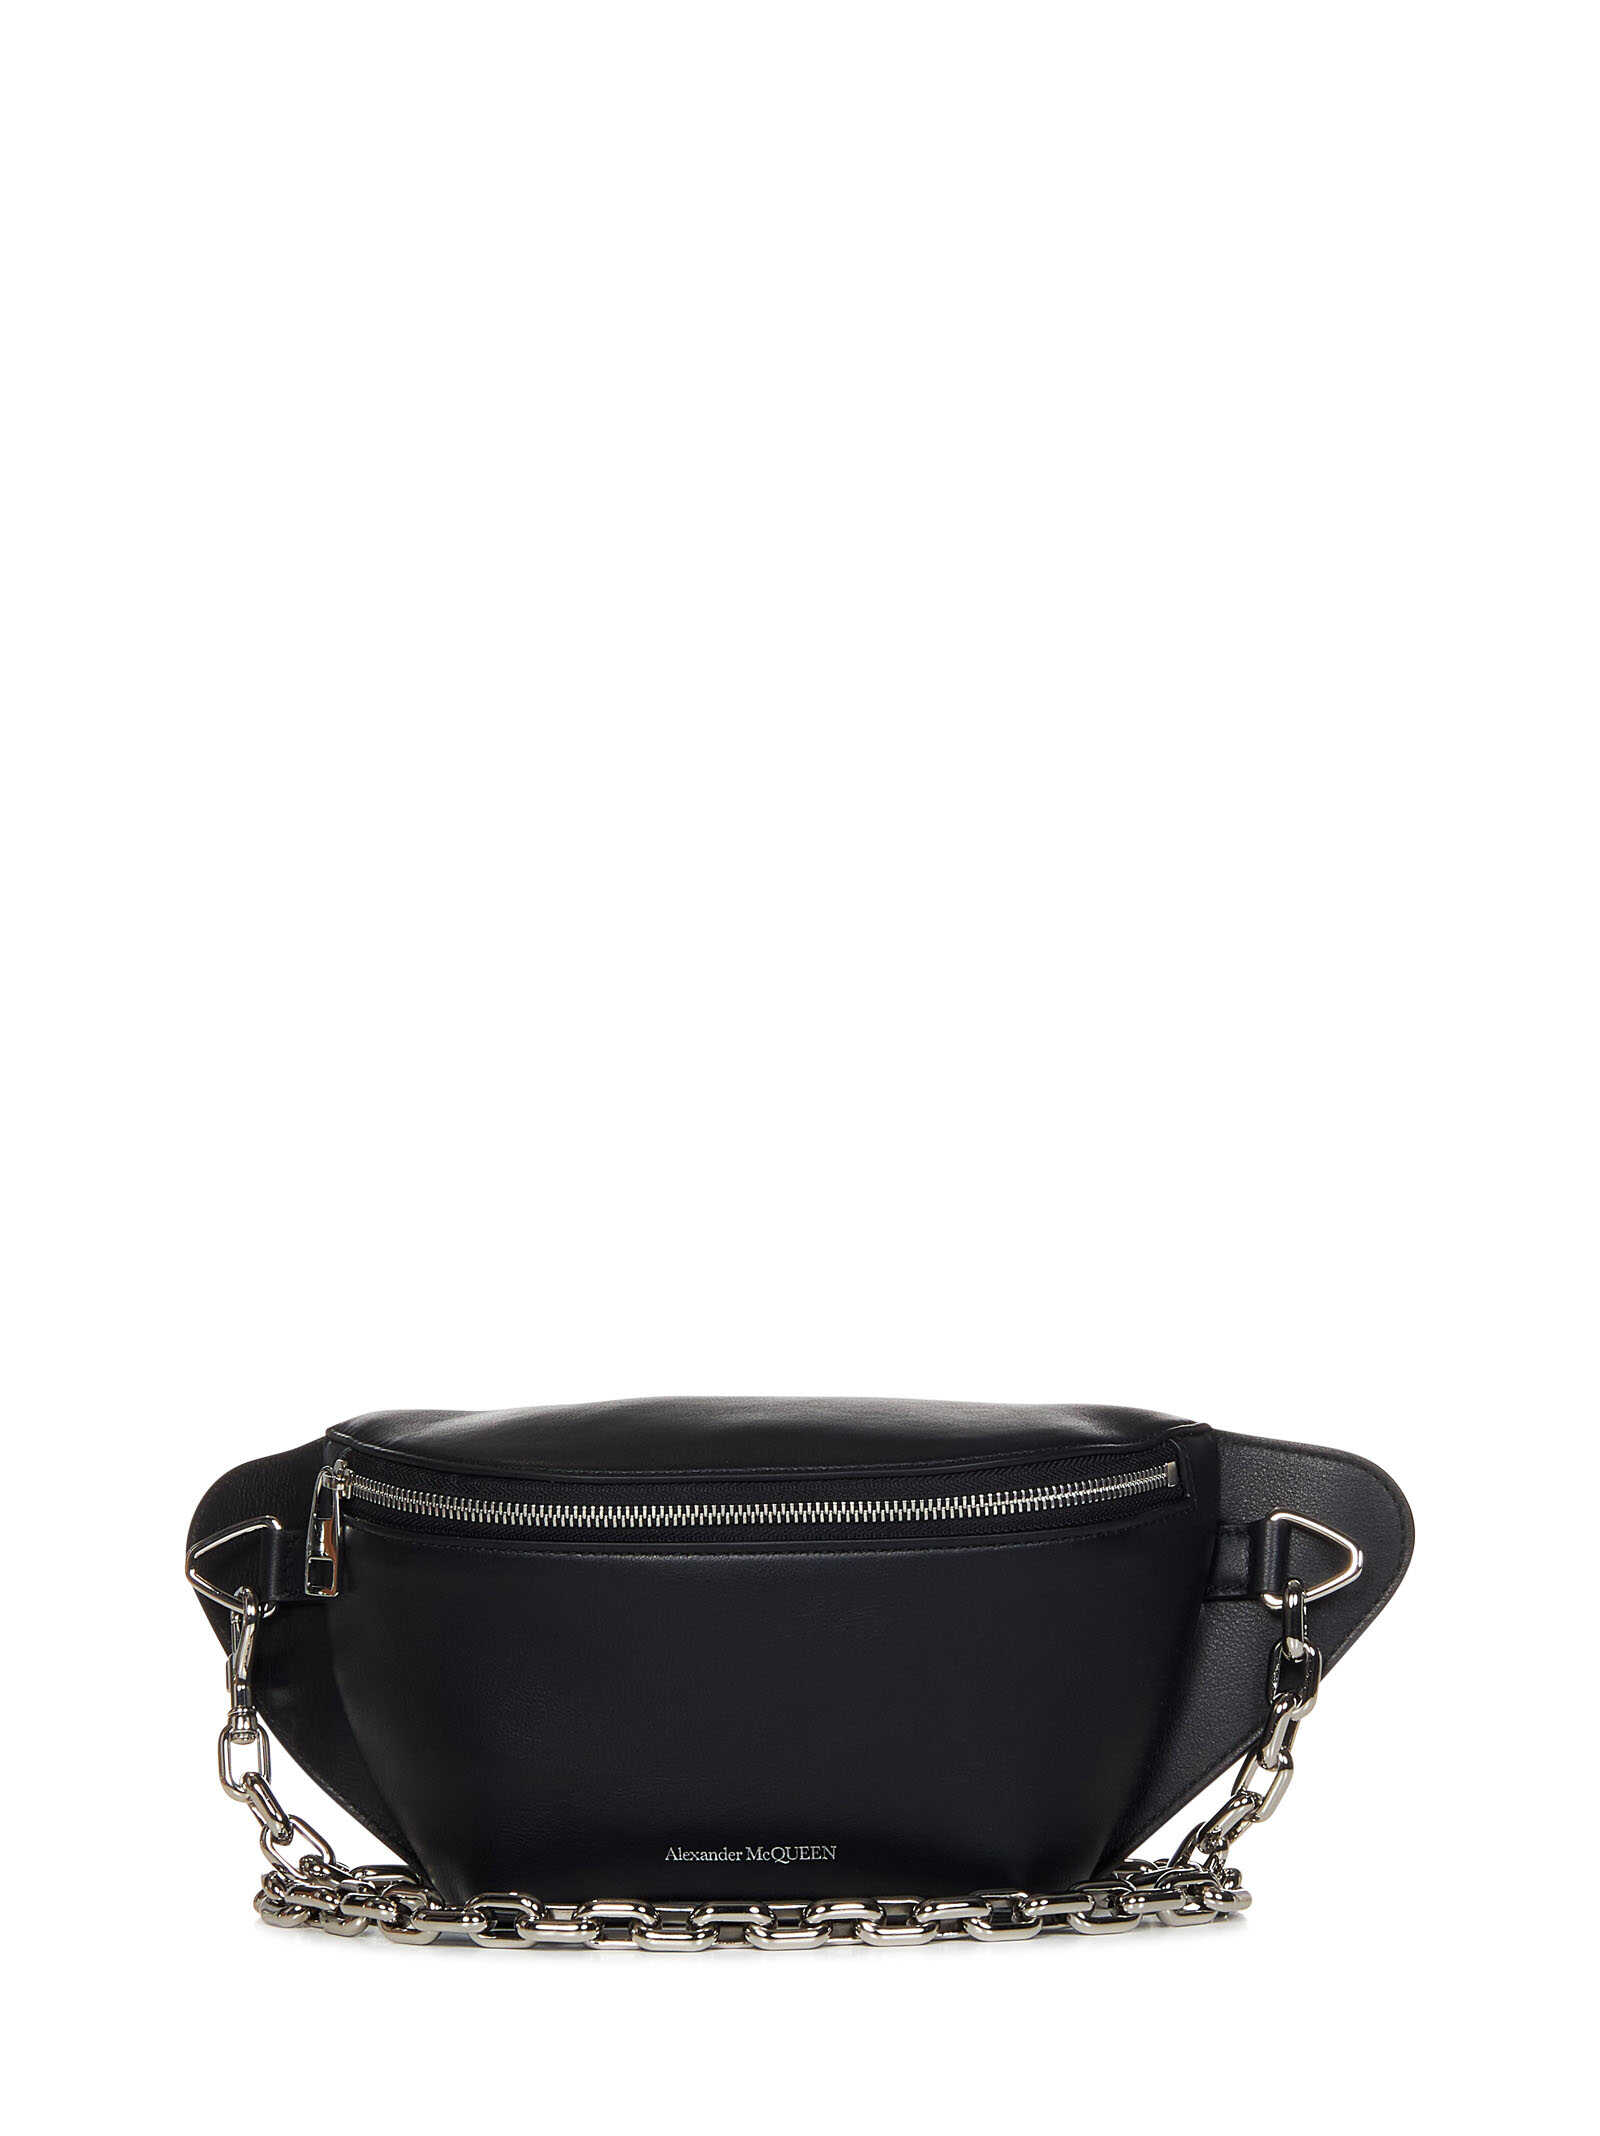 Alexander McQueen Leather handbag with logo print Black